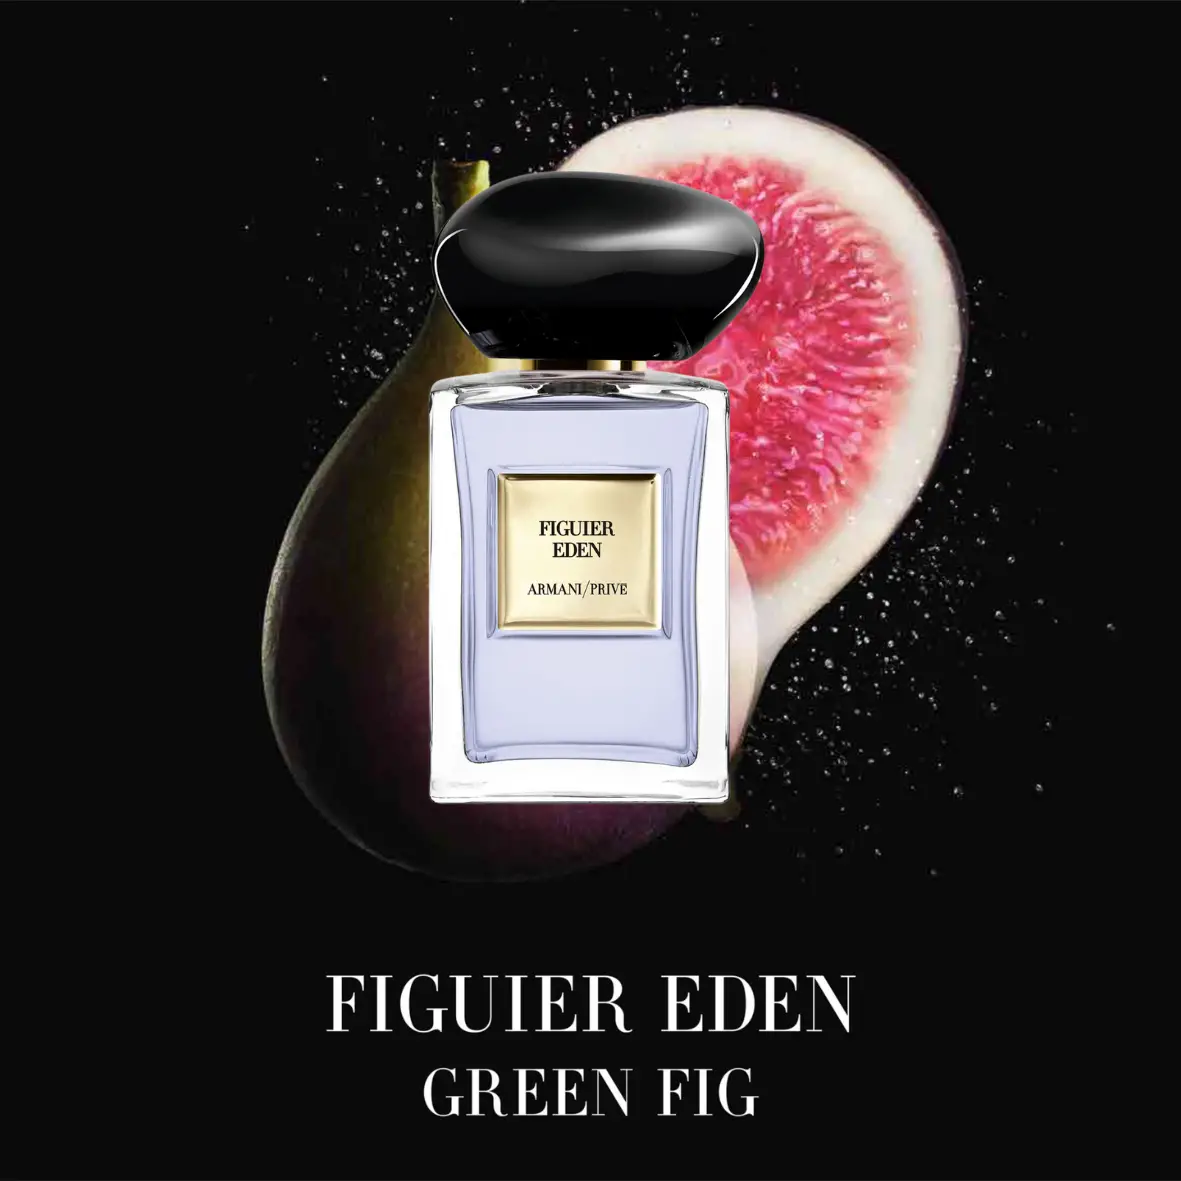 Figuier Eden Giorgio Armani
Best Fig Perfumes